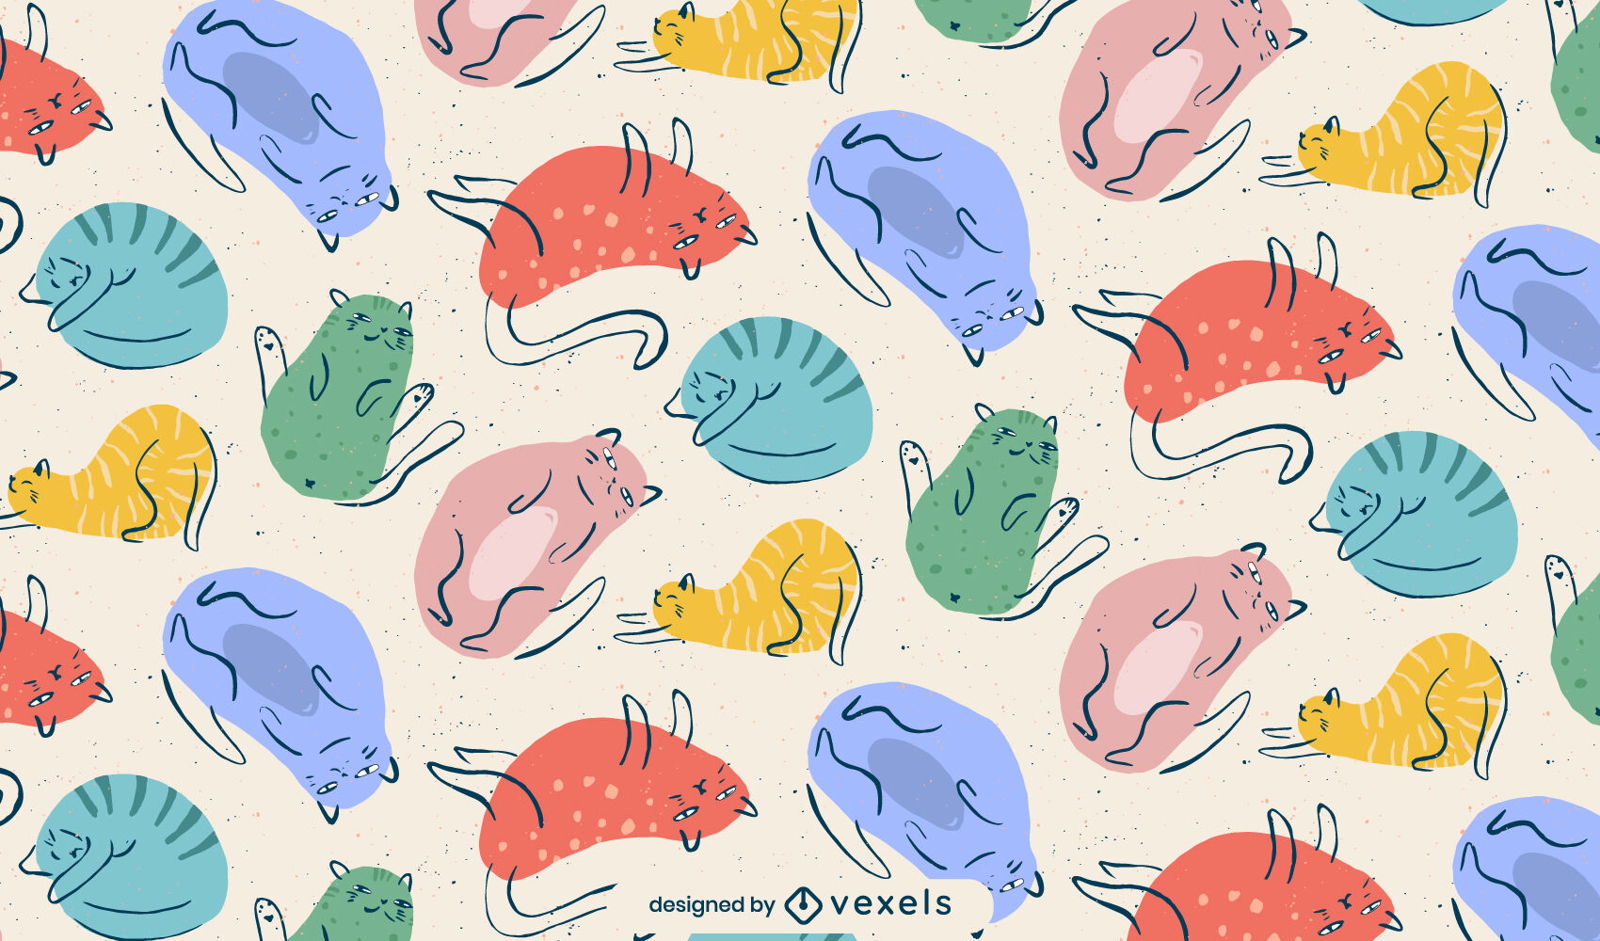 Cat animals colorful doodle pattern design